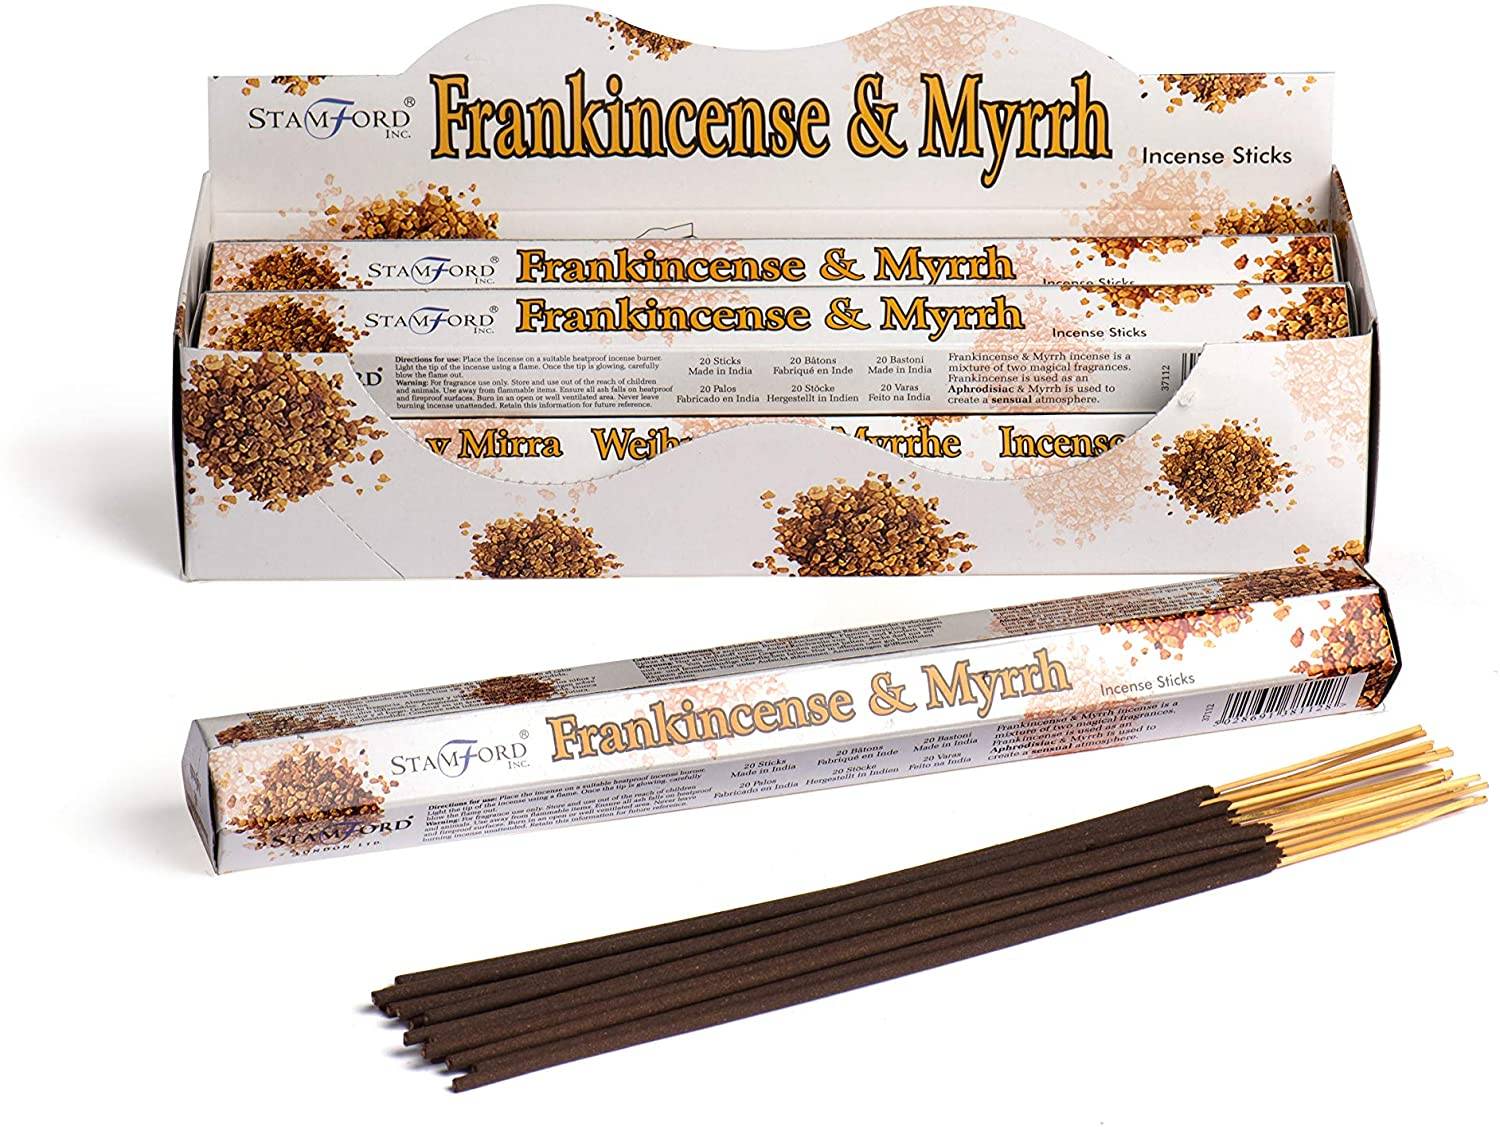 Frankincense and Myrrh incense sticks